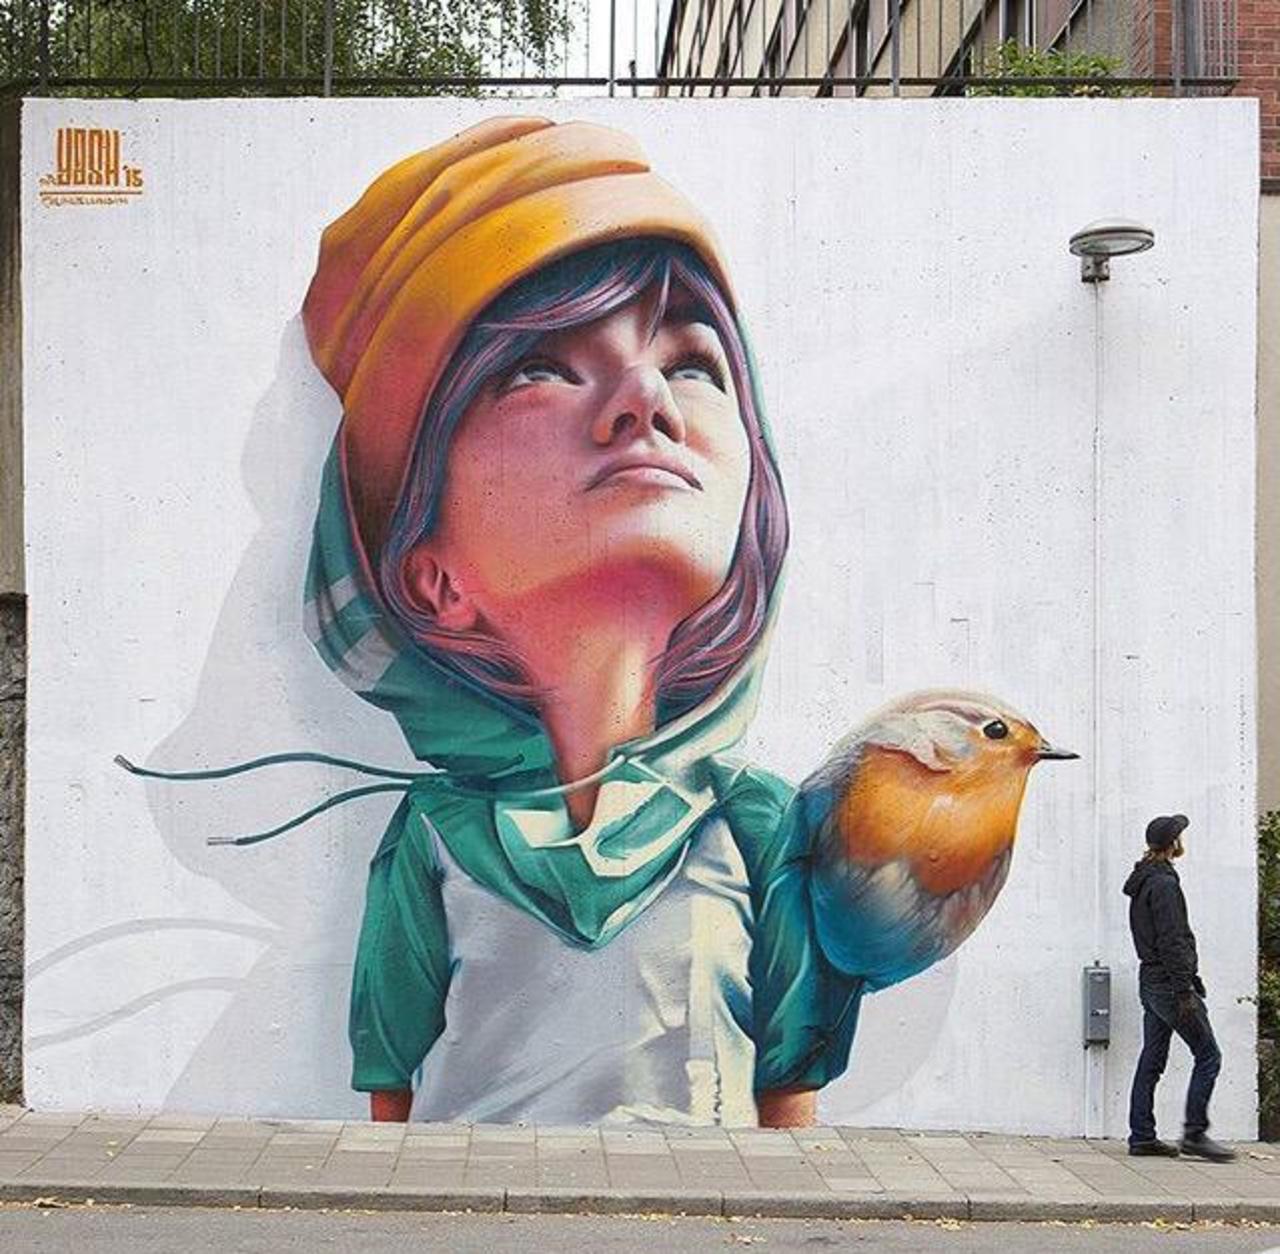 RT belilac "RT belilac "New Street Art by Yash 

#art #graffiti #mural #streetart http://t.co/NBfHjpvsmj""